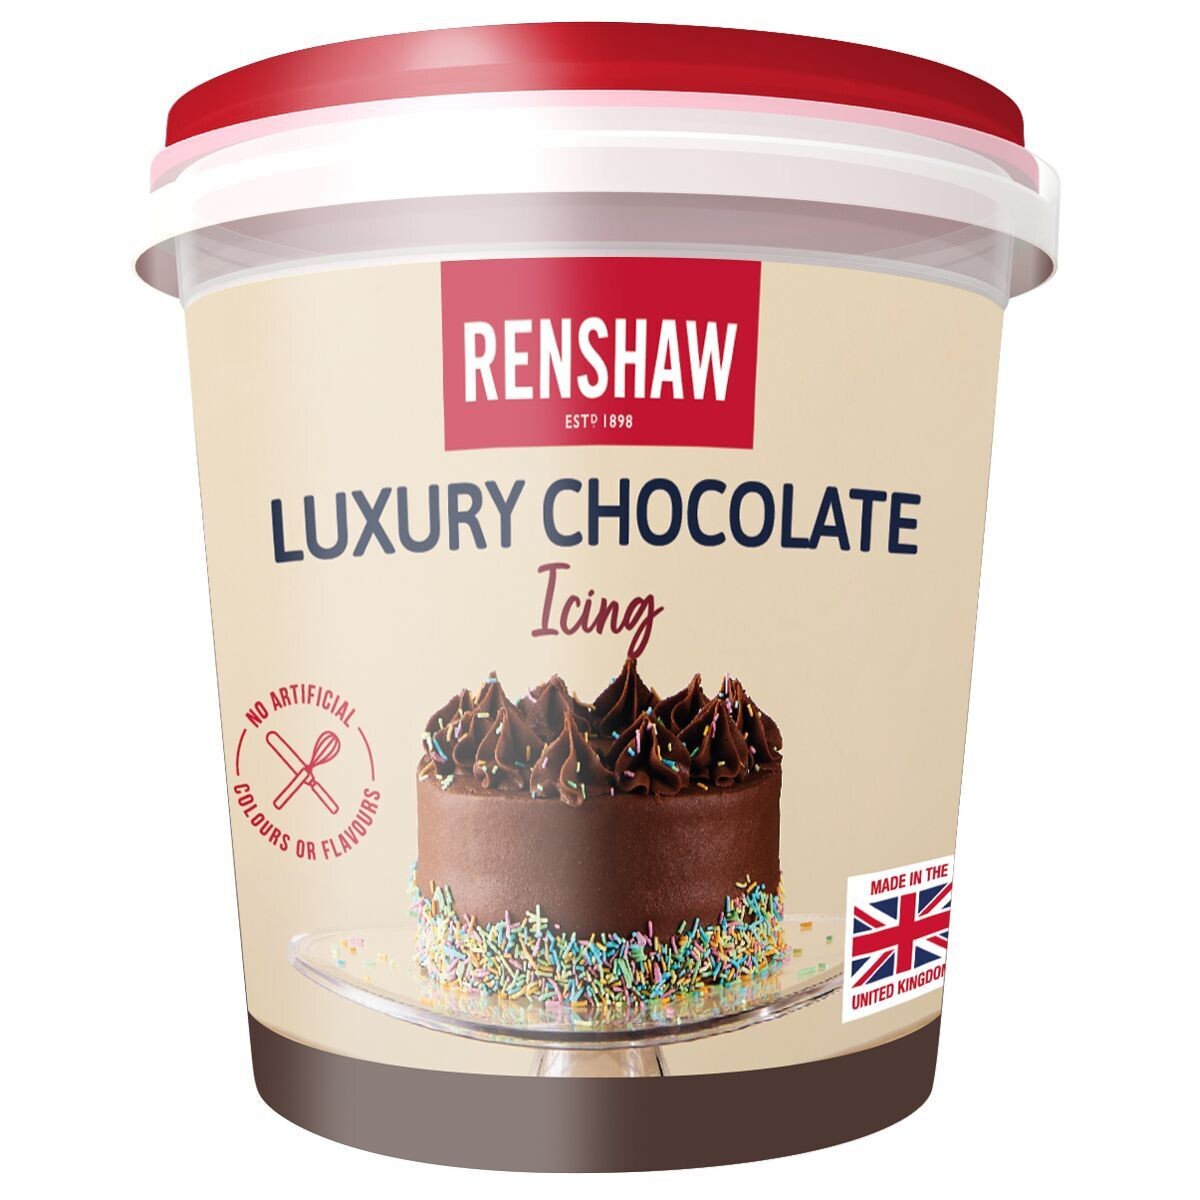 Renshaw Luxury Chocolate Icing 400g - Γλάσο Σοκολάτας